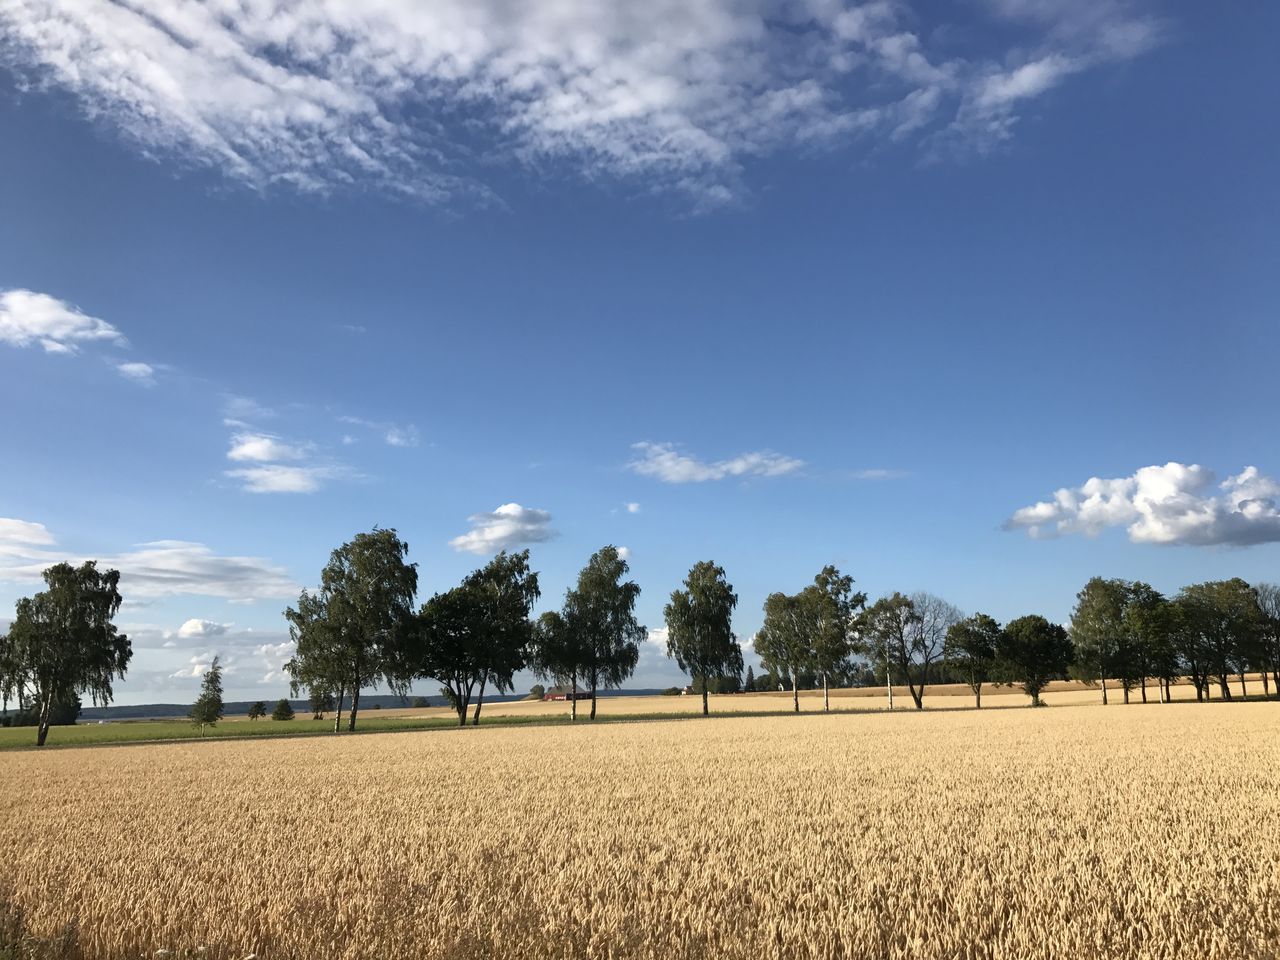 Agriculture around Linköping Sweden